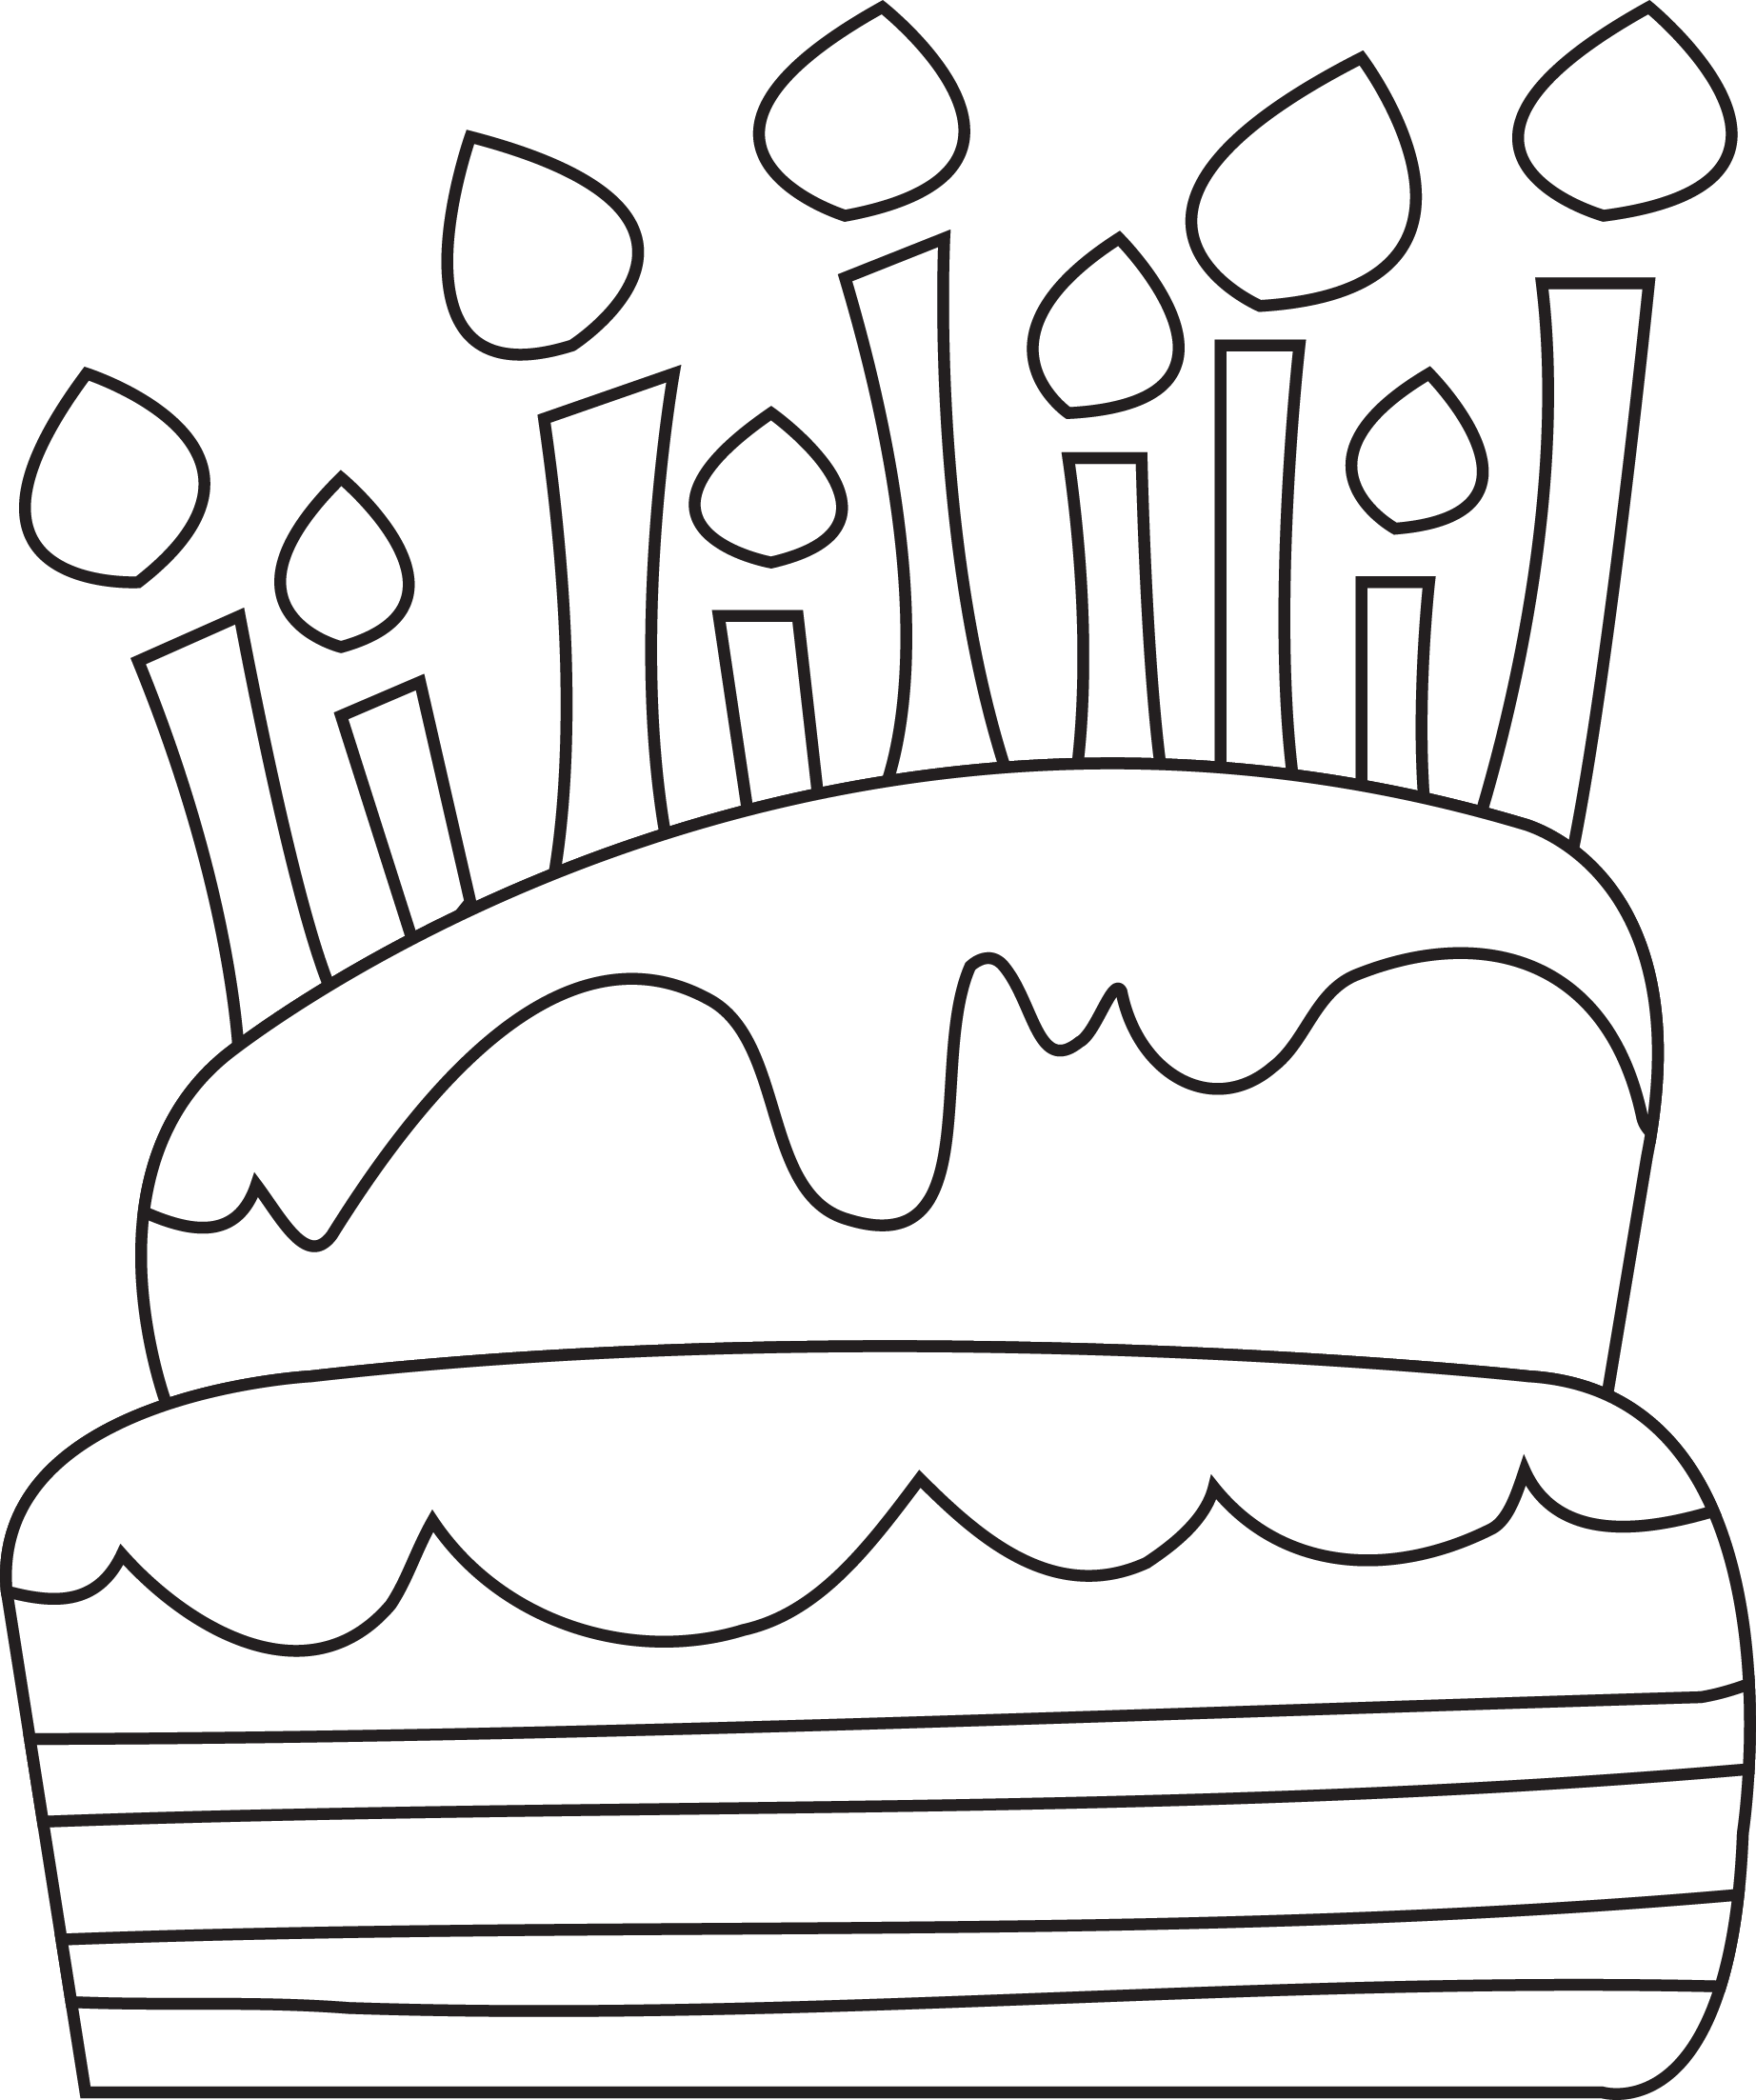 Birthday Cakes Drawings